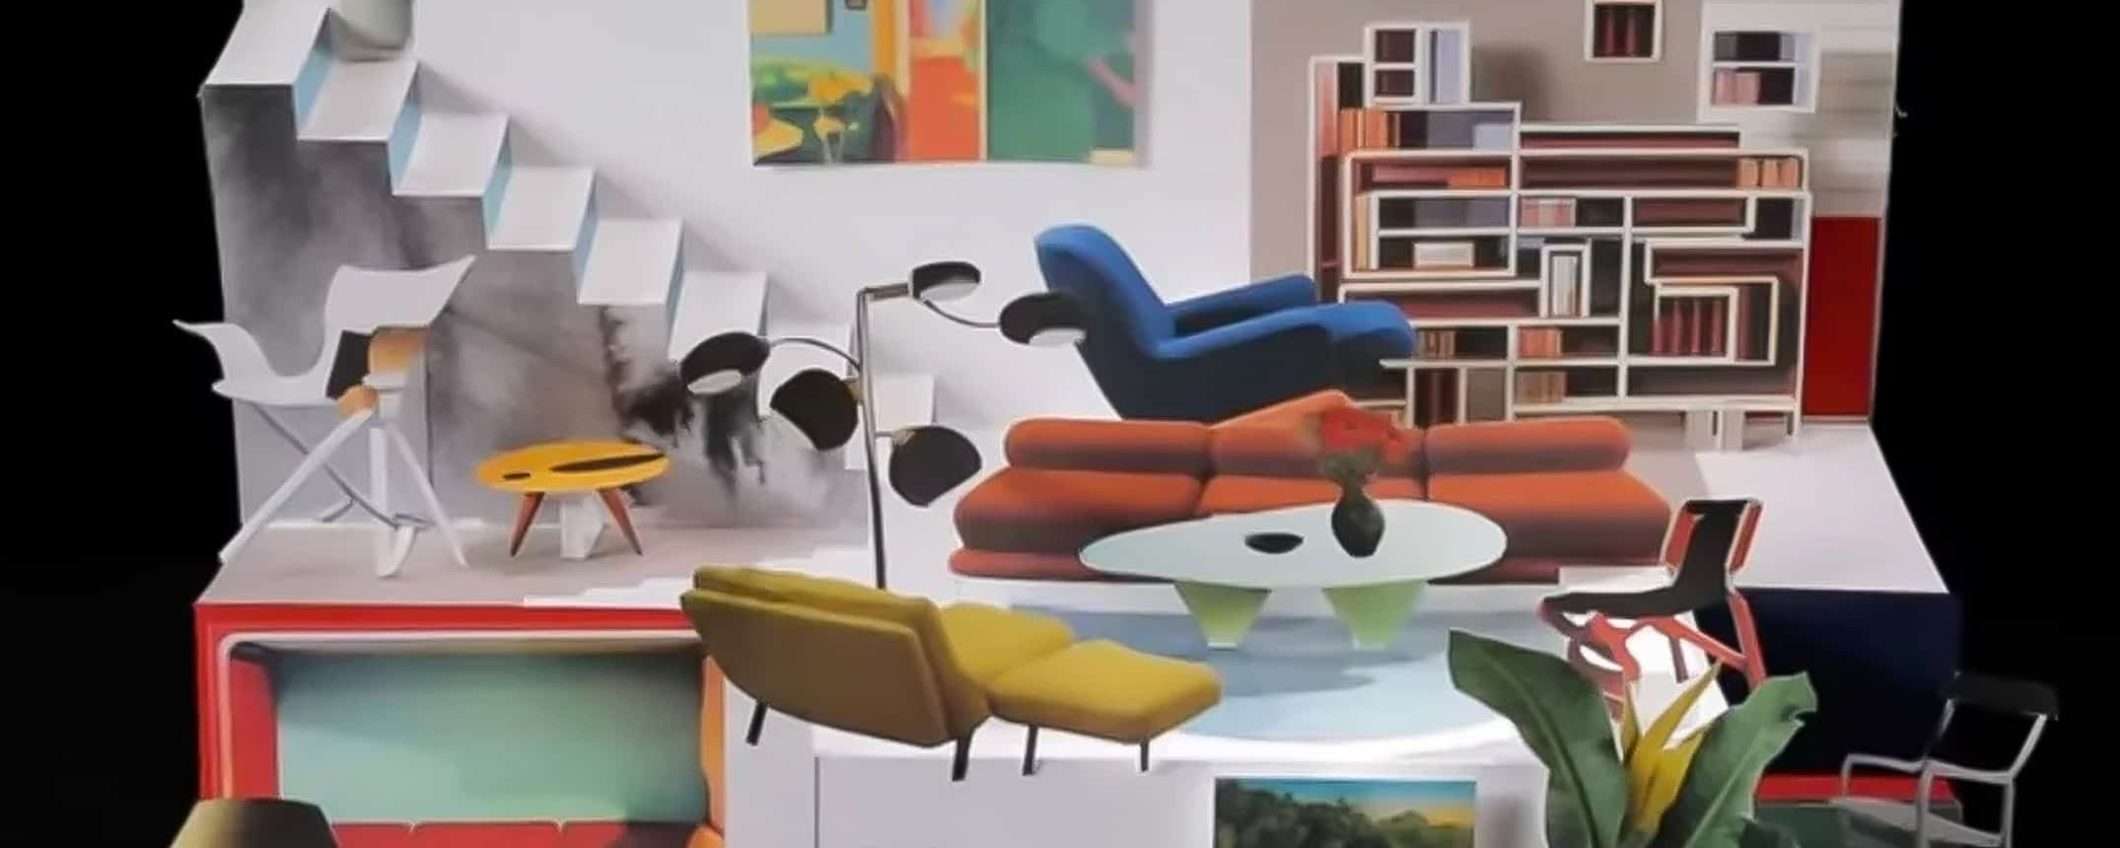 IKEA usa IA generativa per disegnare nuovi mobili